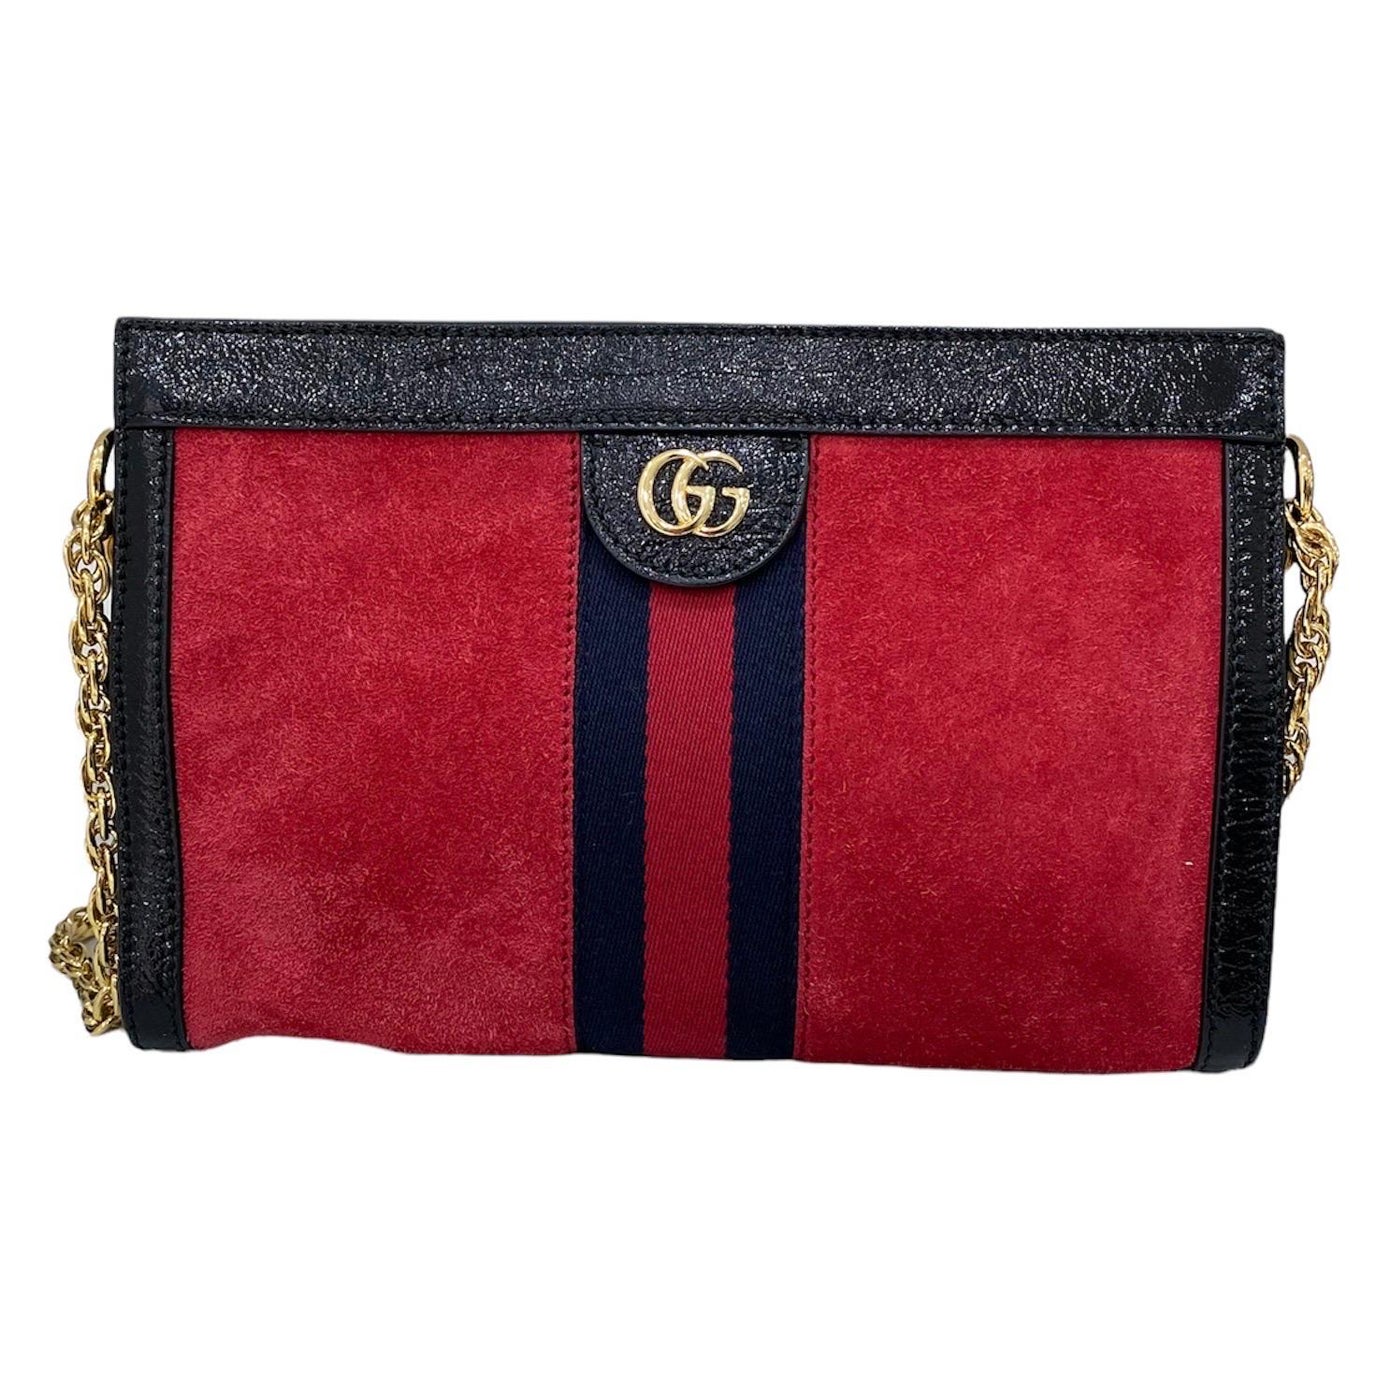 Gucci Ophidia Red Suede Shoulder Bag 